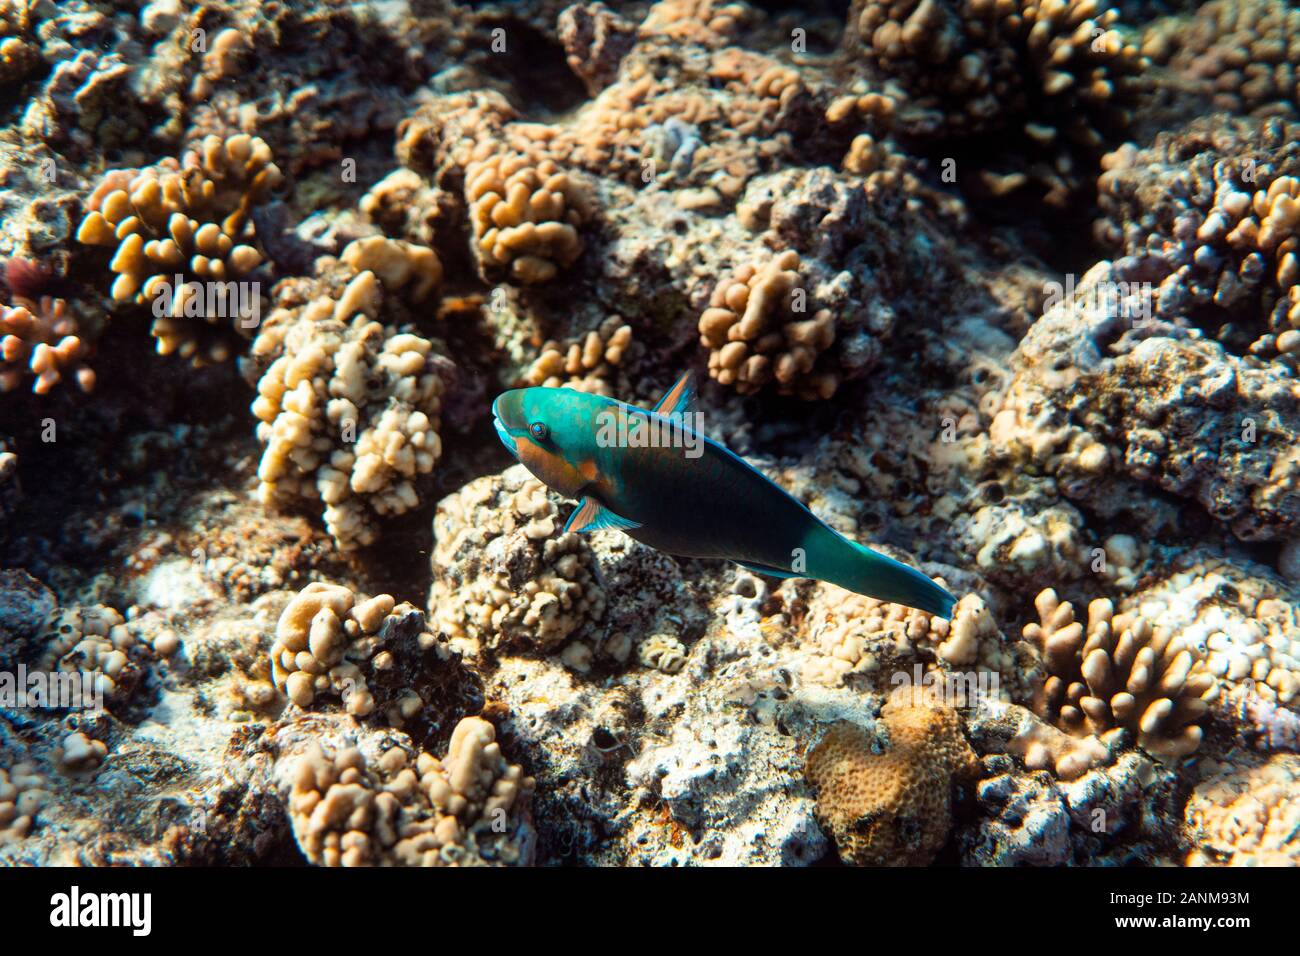 Scarus psittacus underwater in the ocean of egypt, underwater in the ocean of egypt, Scarus psittacus underwater photograph underwater photograph, Stock Photo